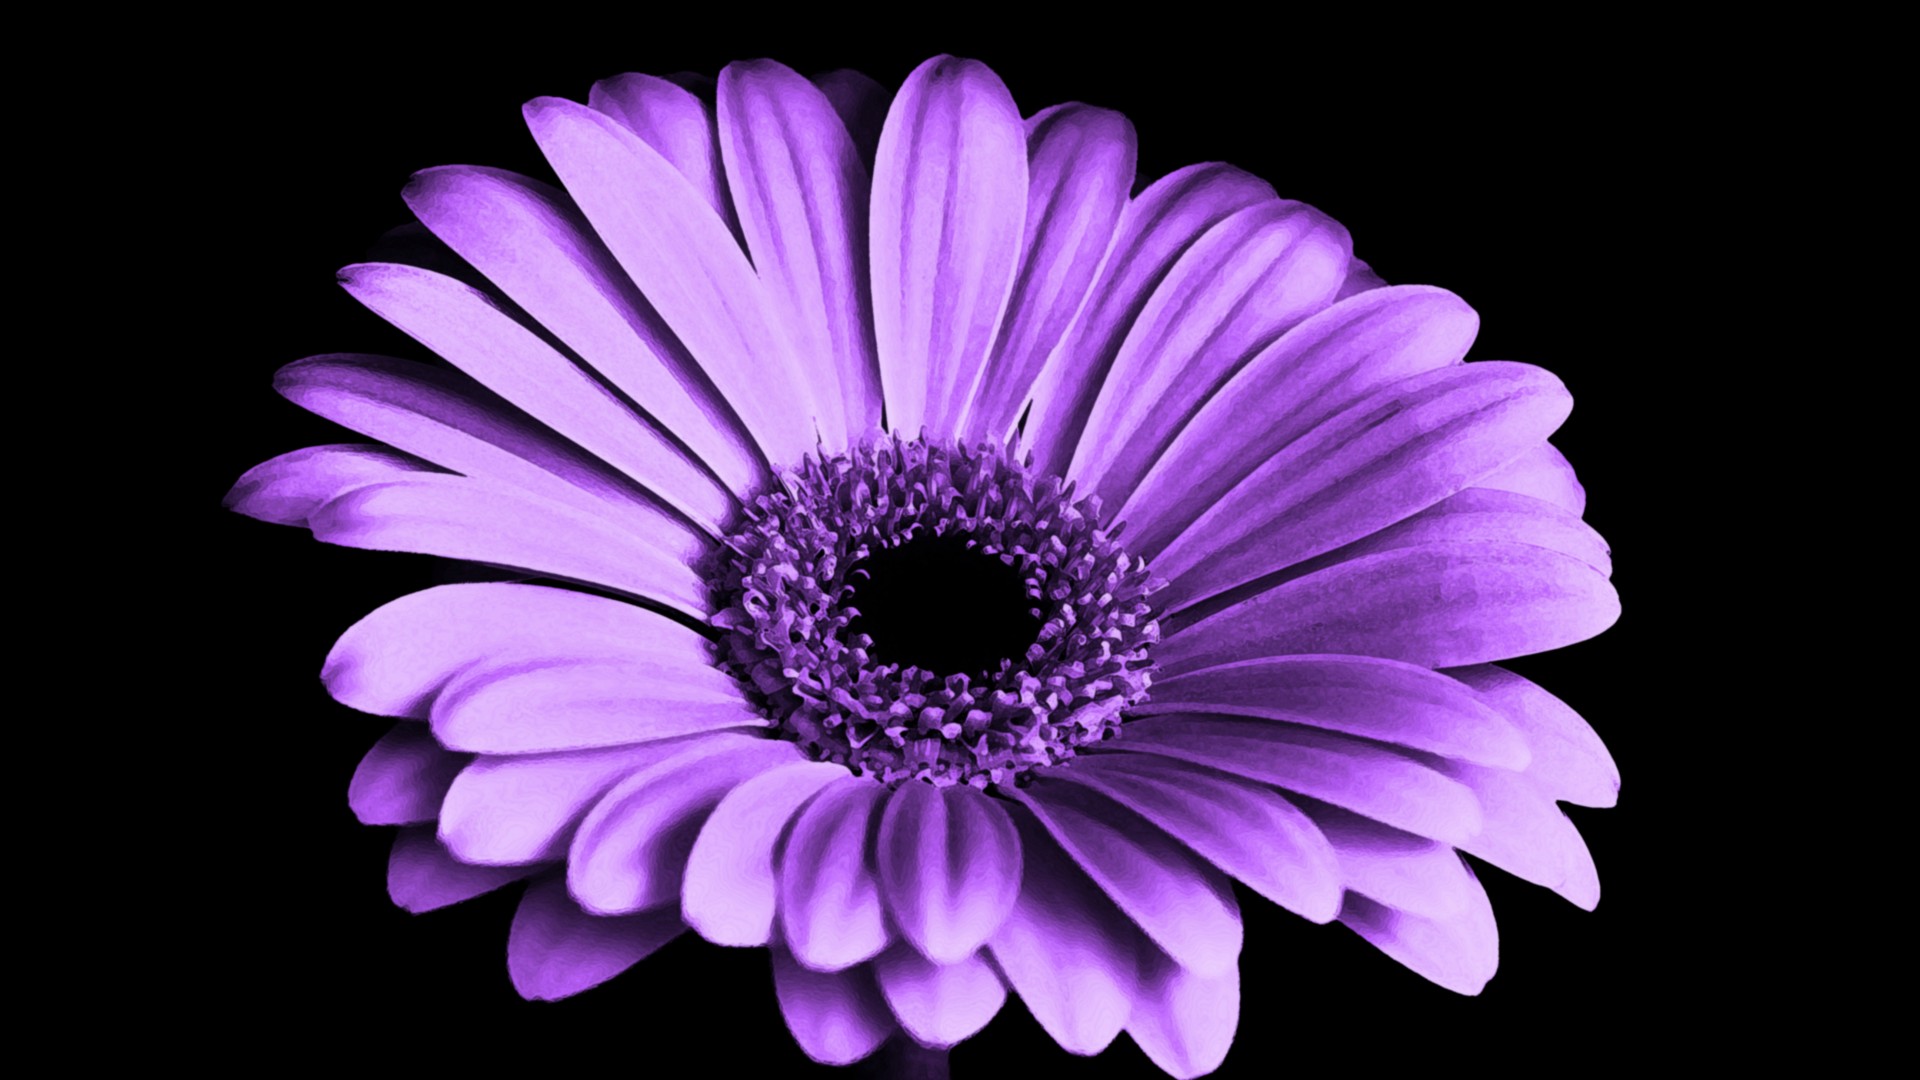 Daisy Flower Purple Hd Wallpaper - Wallpapersfans.com